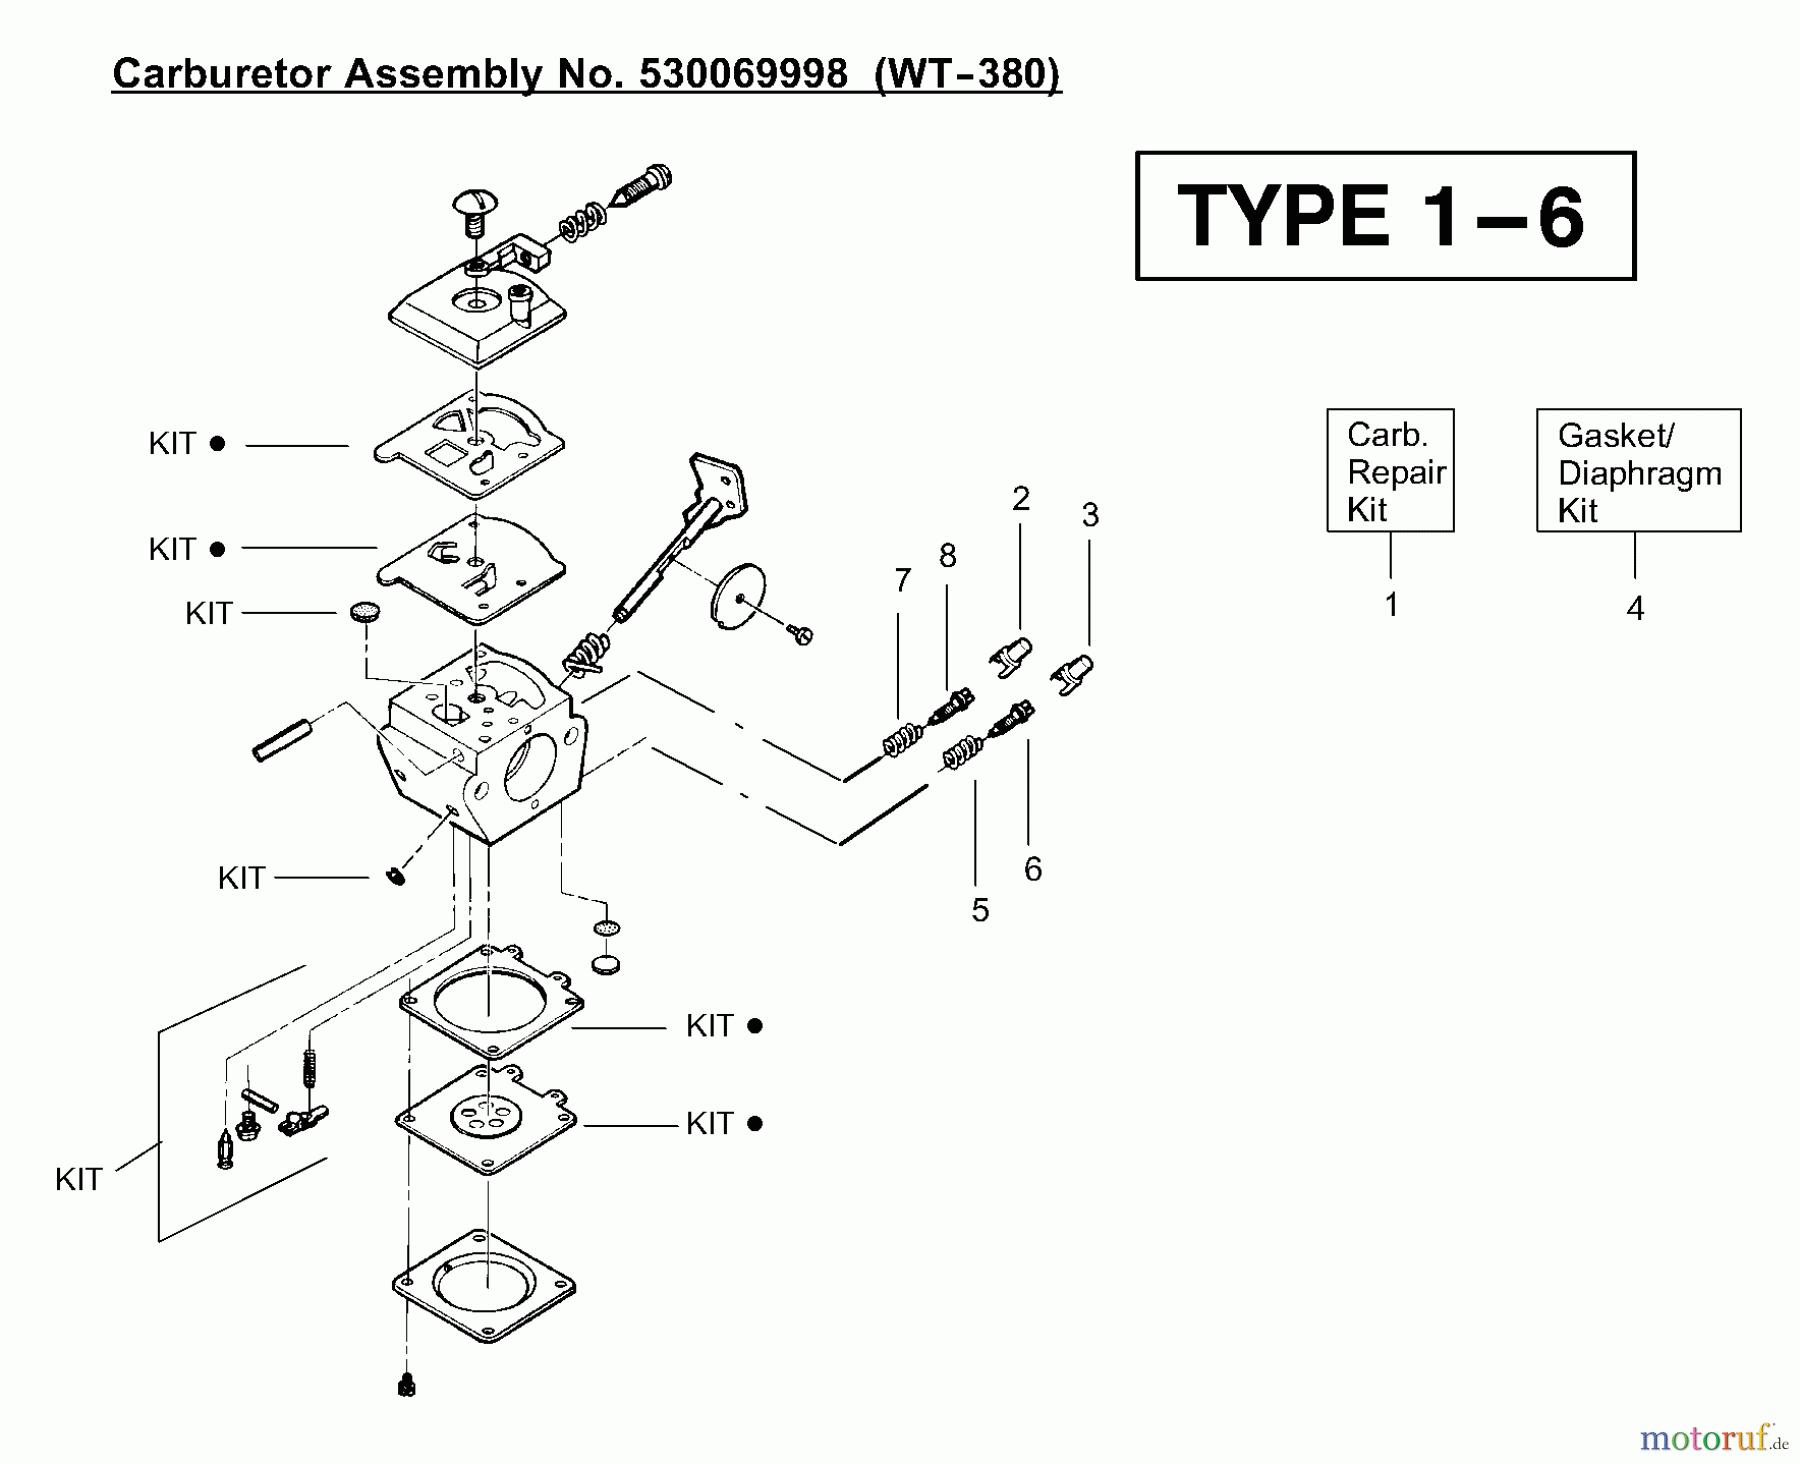  Poulan / Weed Eater Motorsensen, Trimmer BC2400 (Type 5) - Weed Eater String Trimmer Carburetor Assembly (WT380) 530069998